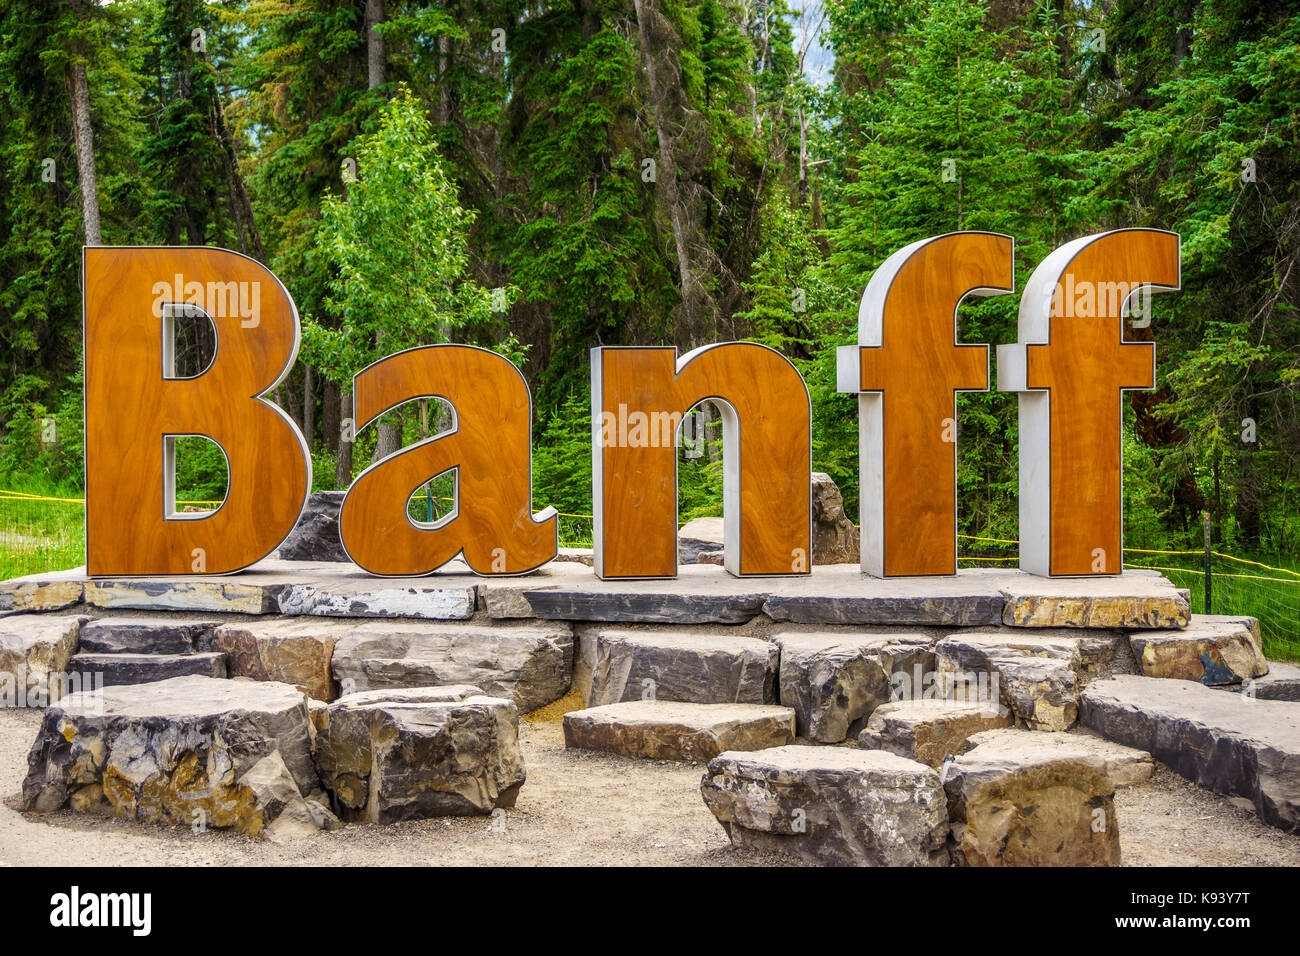 Banff sign, Banff National Park, Alberta, Canada Stock Photo